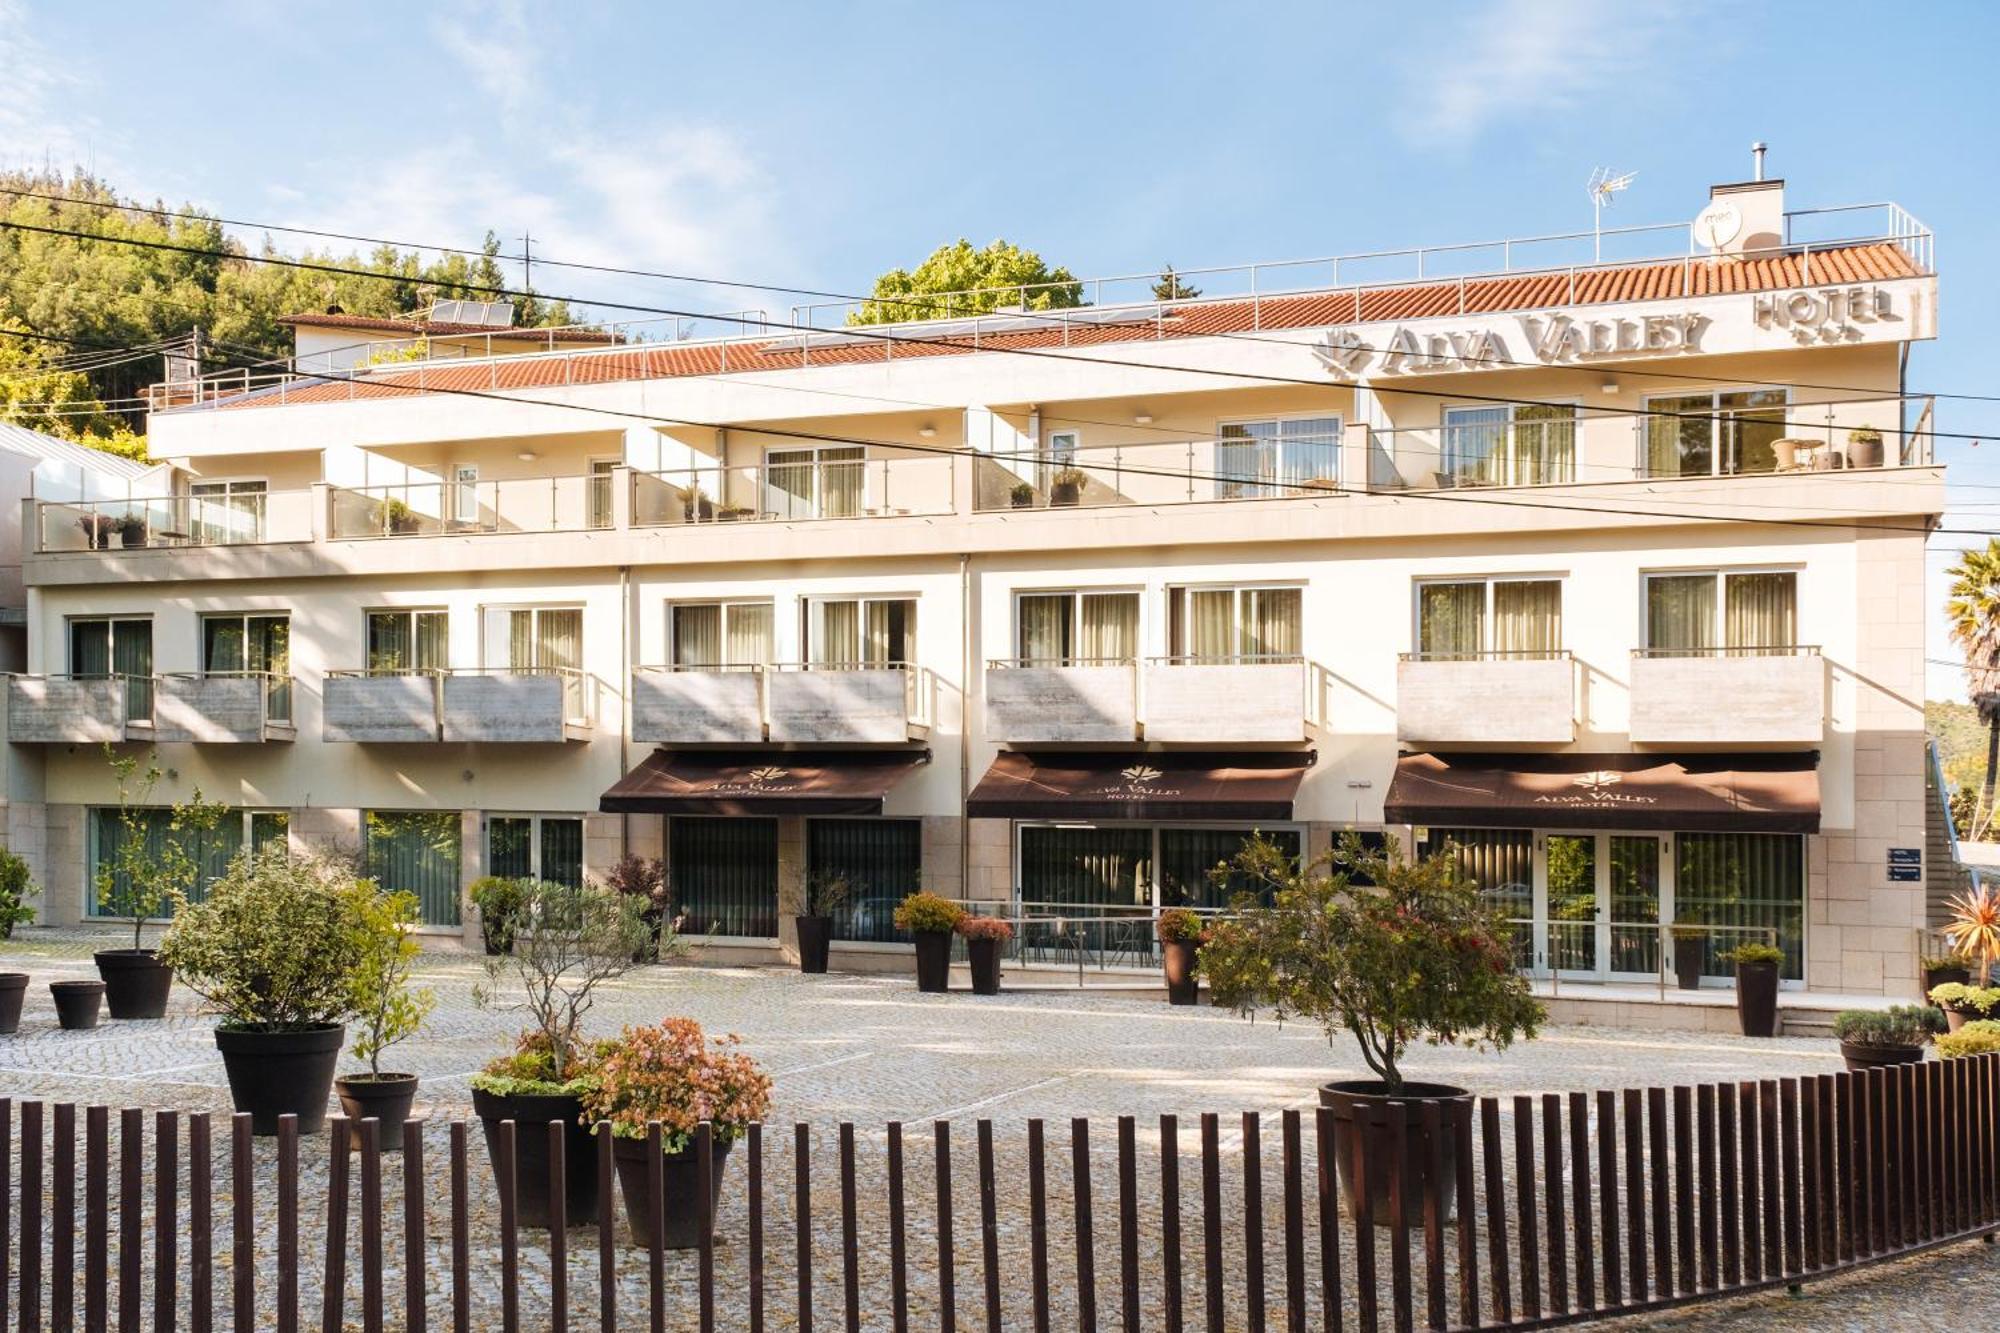 Alva Valley Hotel Oliveira do Hospital Exterior photo